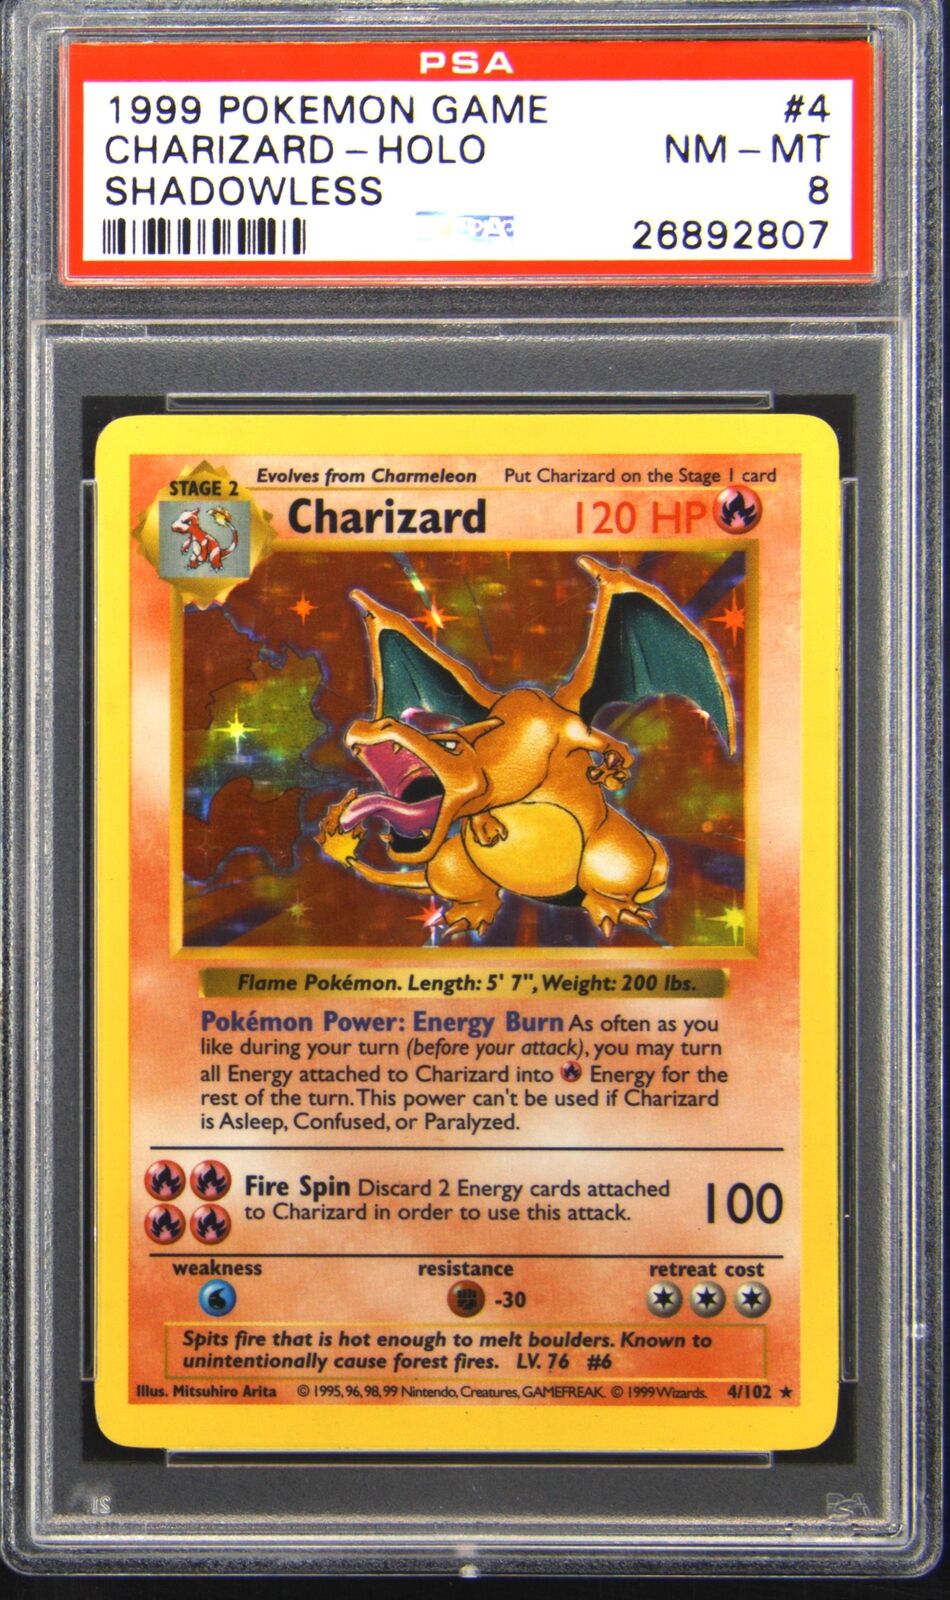 1999 Base Set 4 Charizard Shadowless Holo Rare Pokemon TCG Card PSA 8